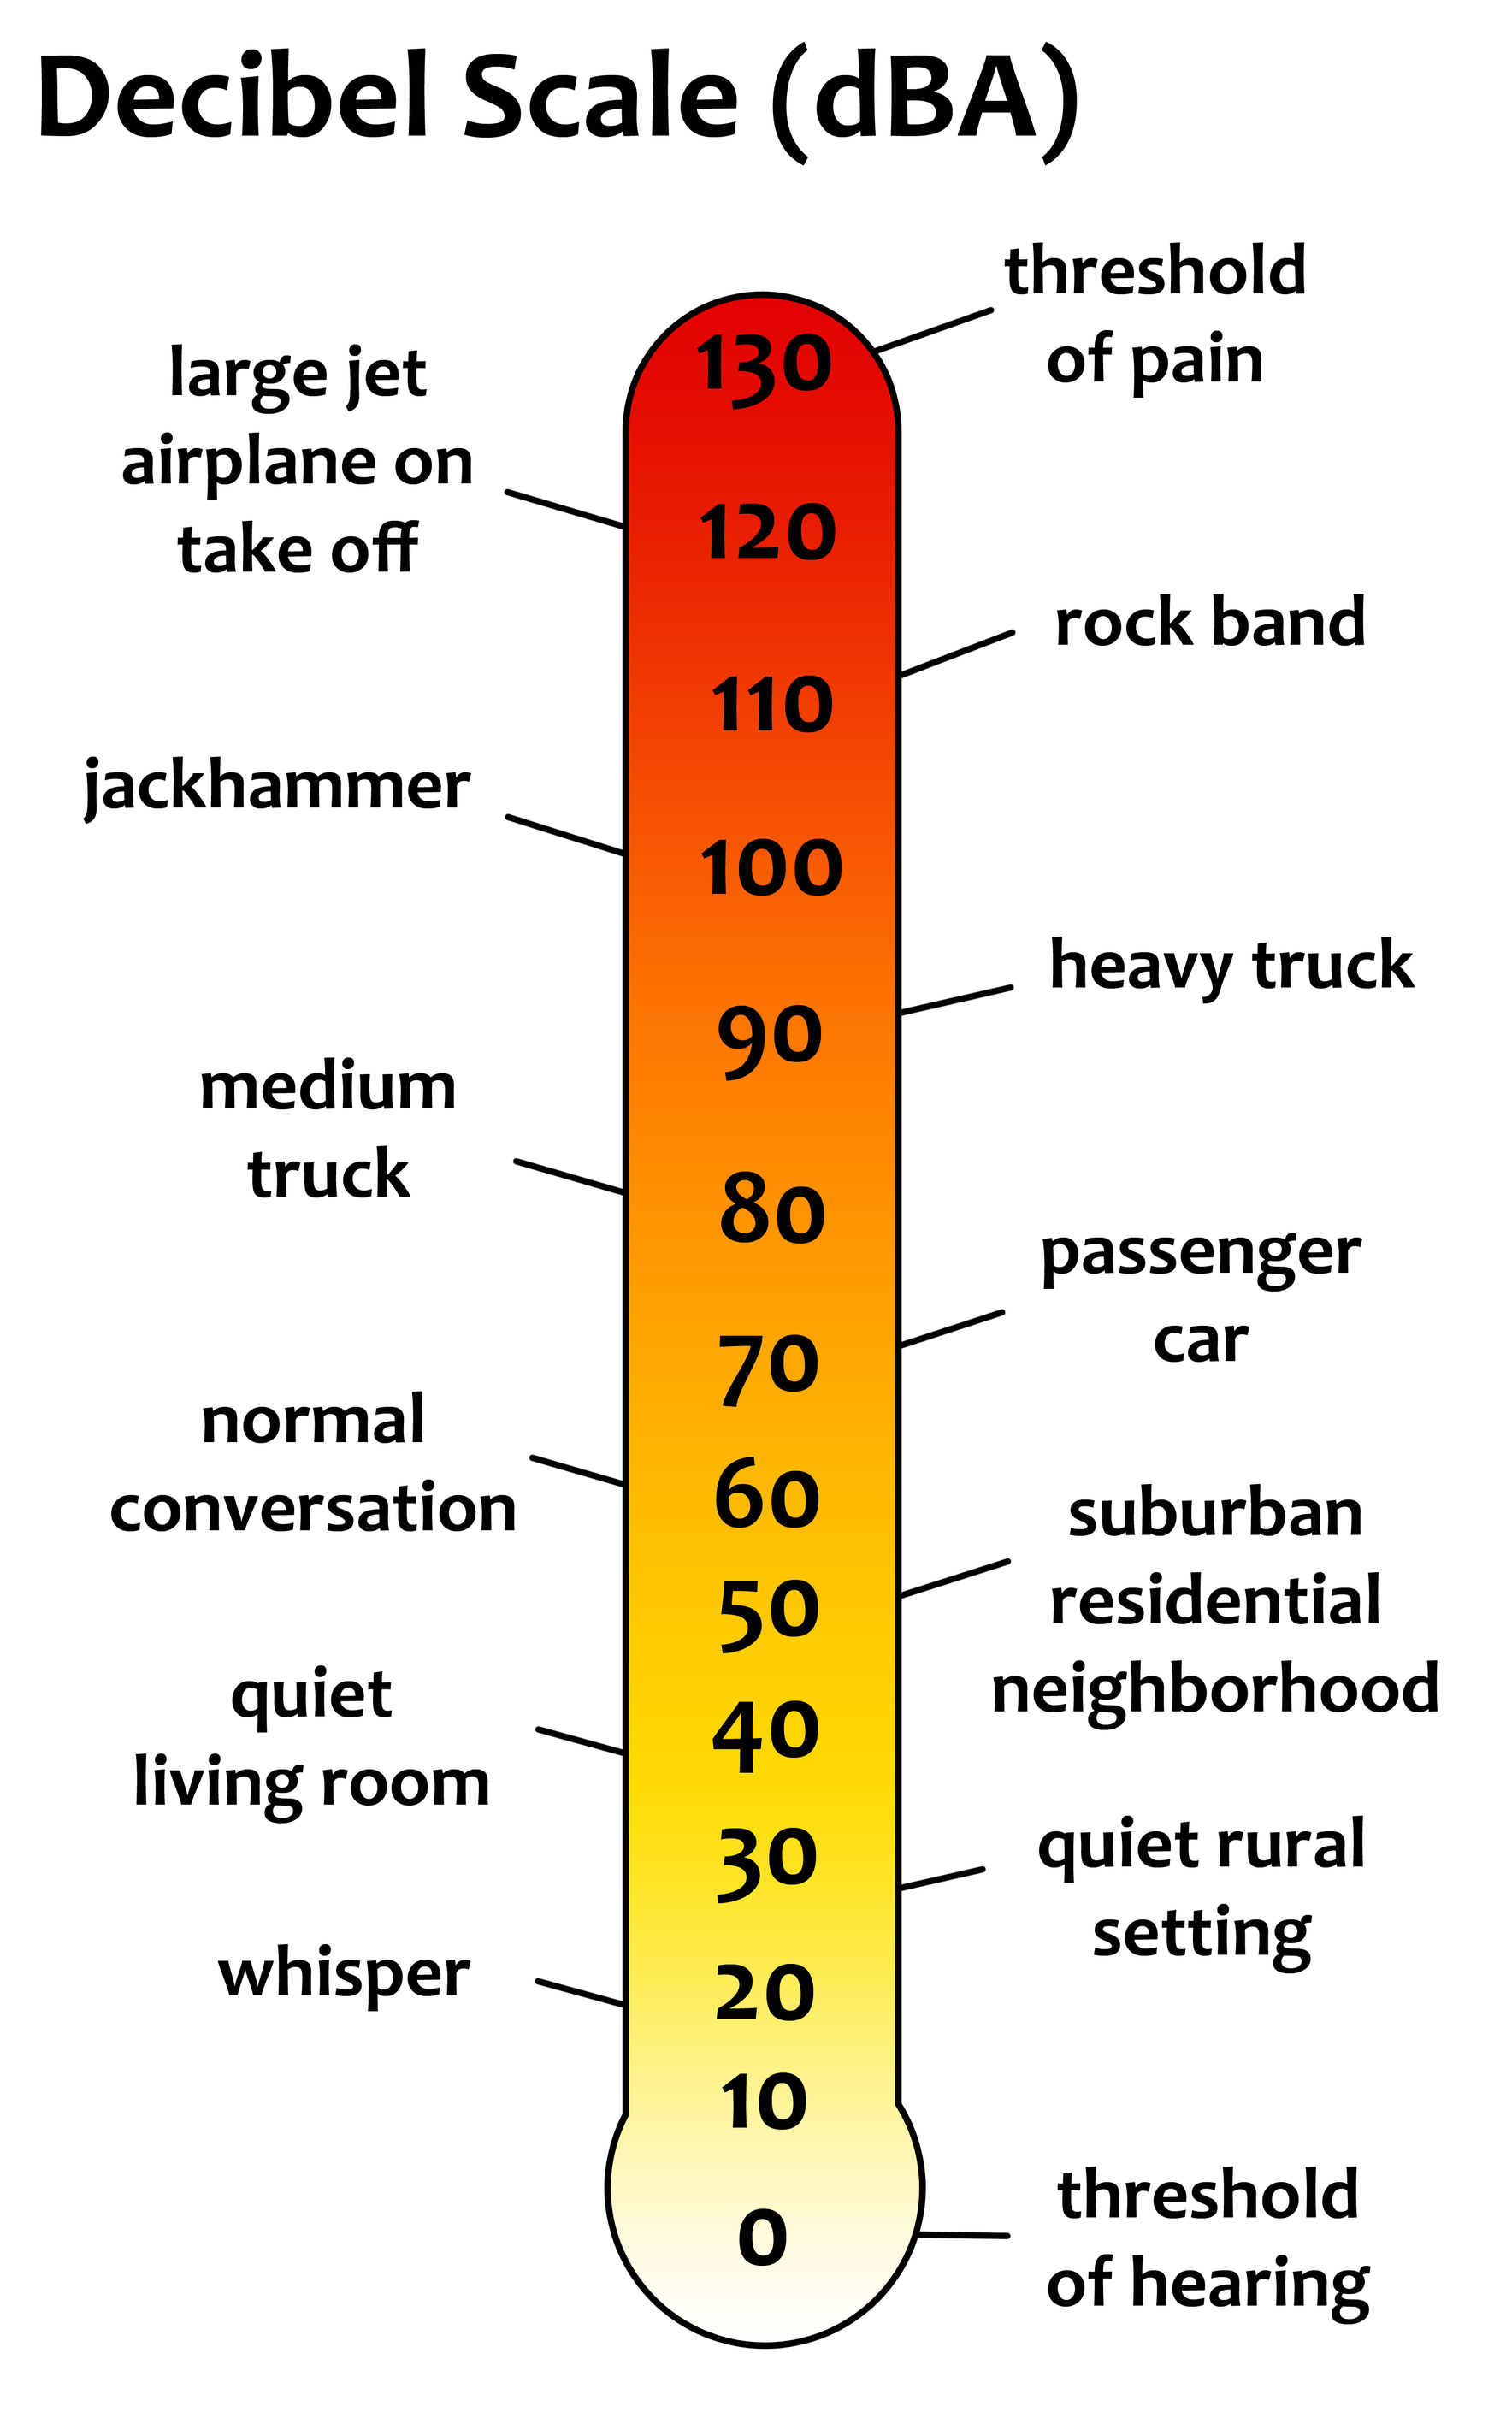 the decibel scale measures